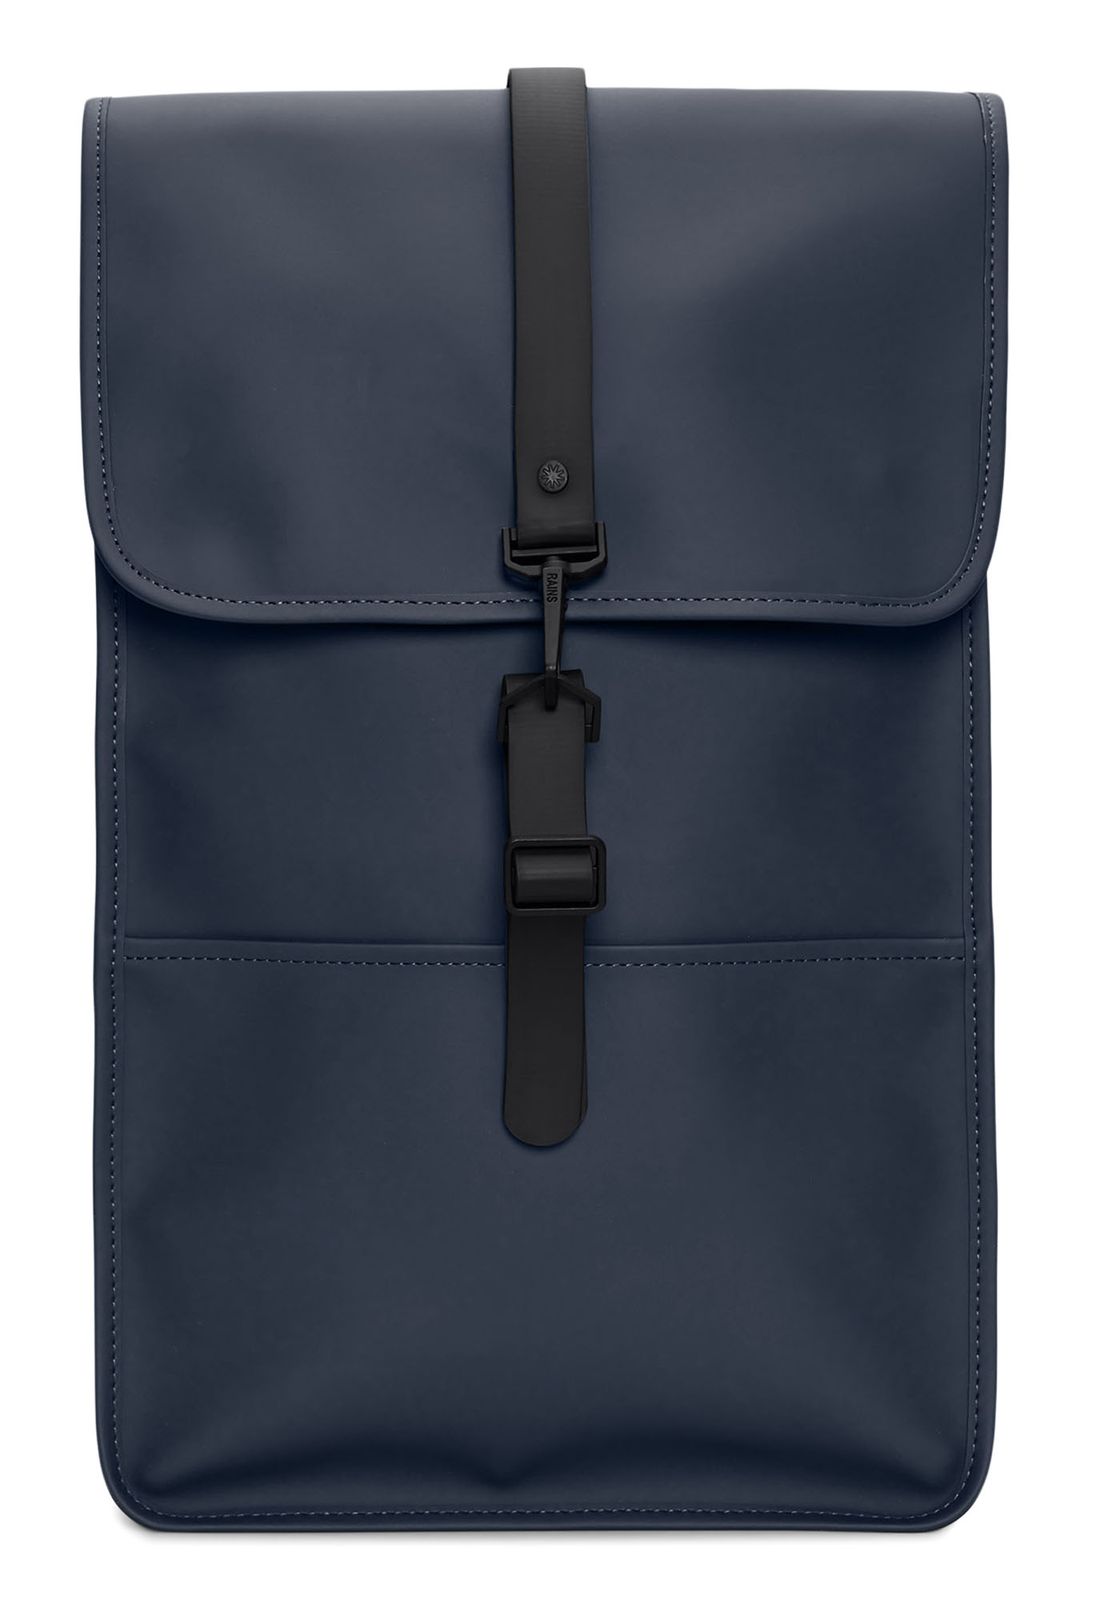 RAINS backpack Backpack Navy | Buy bags, purses & accessories 